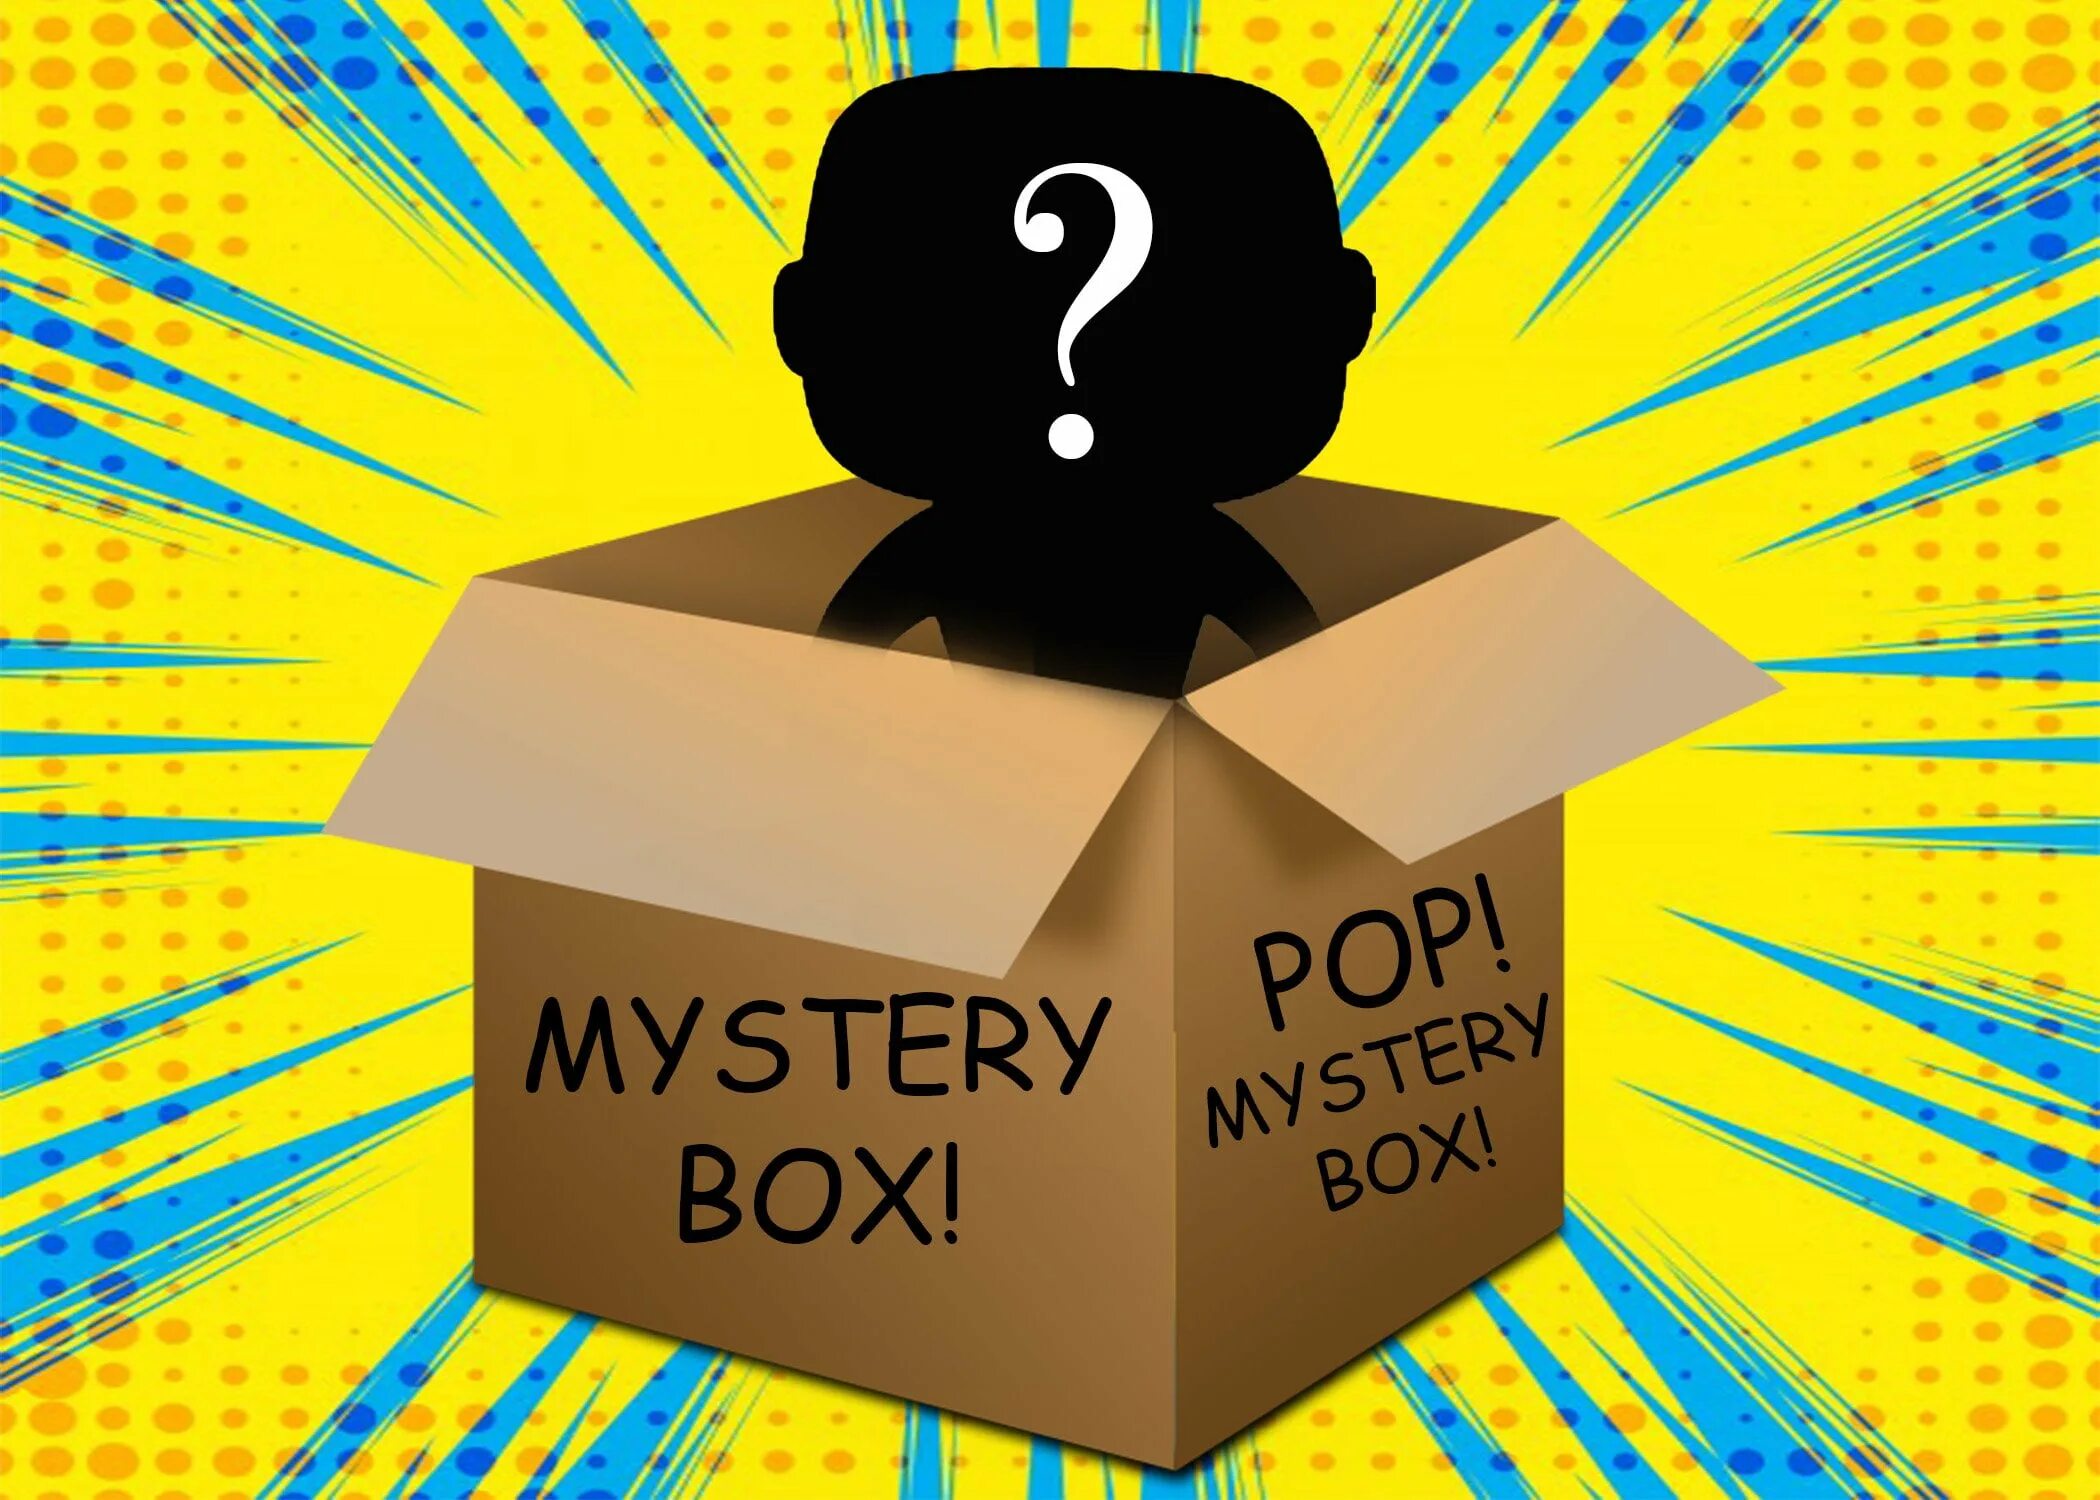 Mystery Box. Mystery Box надпись. Mystery Box для детей. Funko Pop Mystery Box. Мистери бокс отзывы